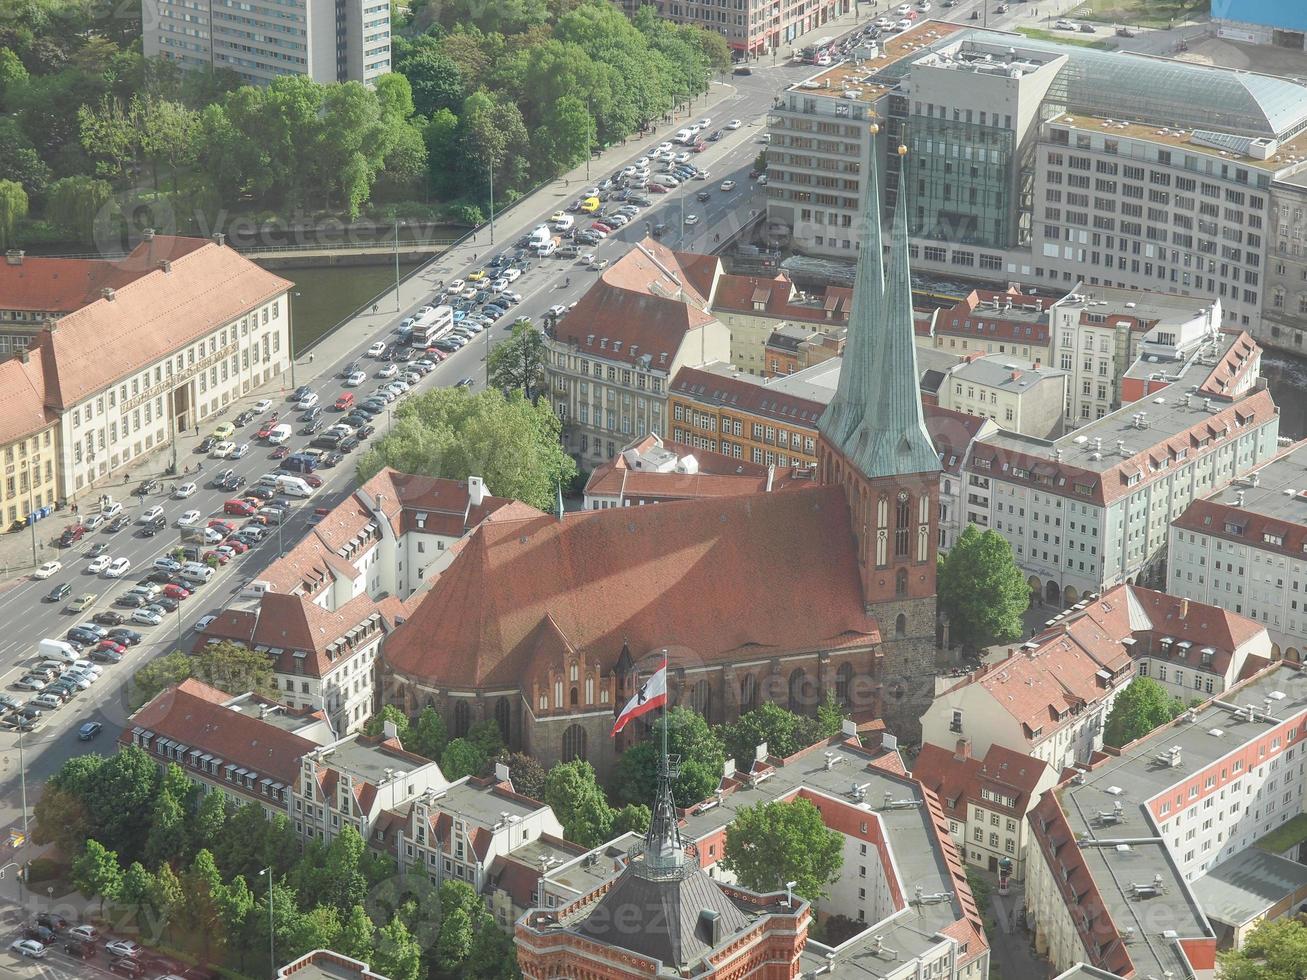 Berliner Luftbild foto